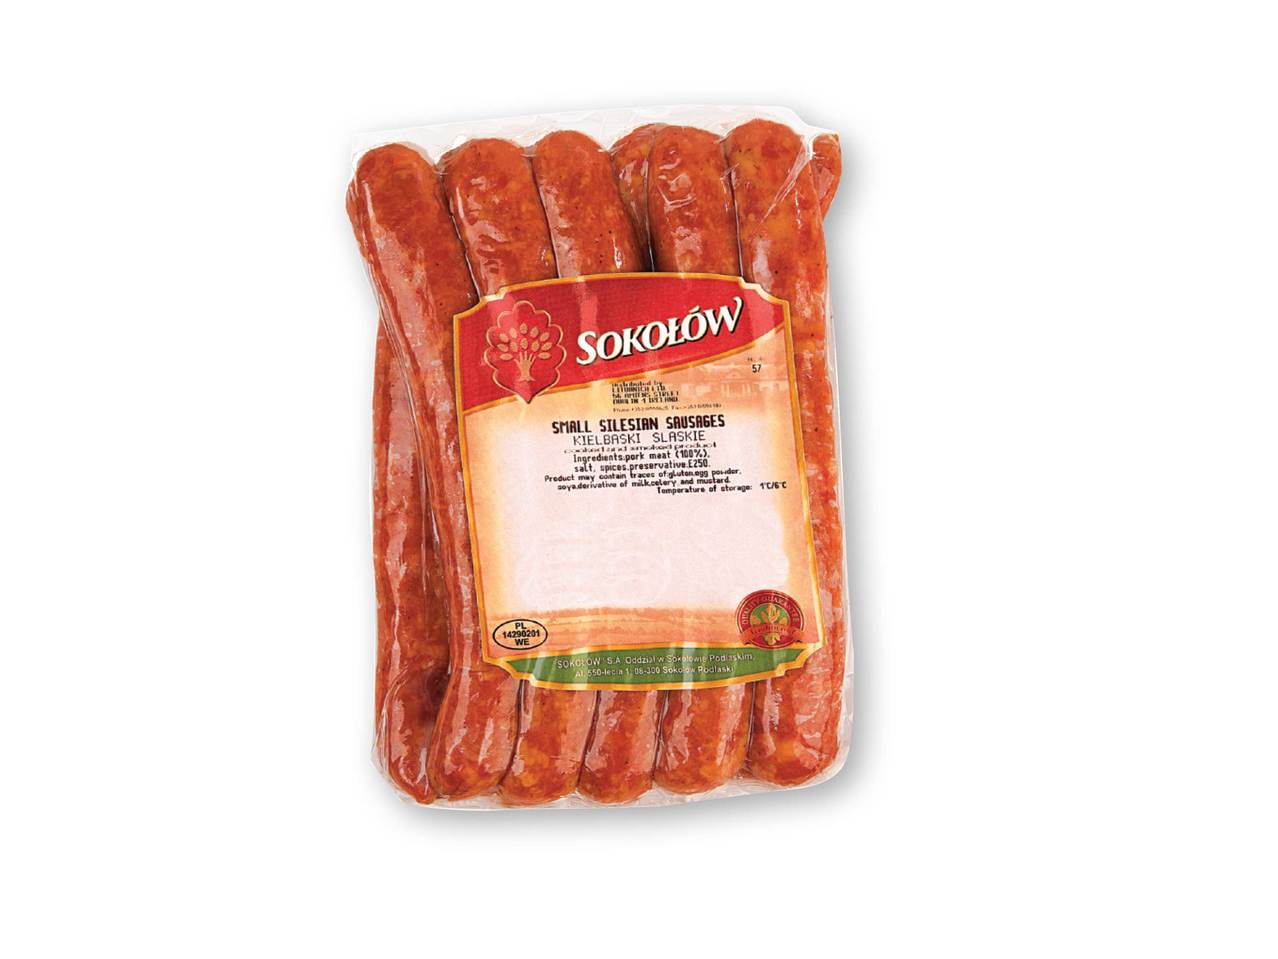 SOKOŁÓW Small Silesian Sausages